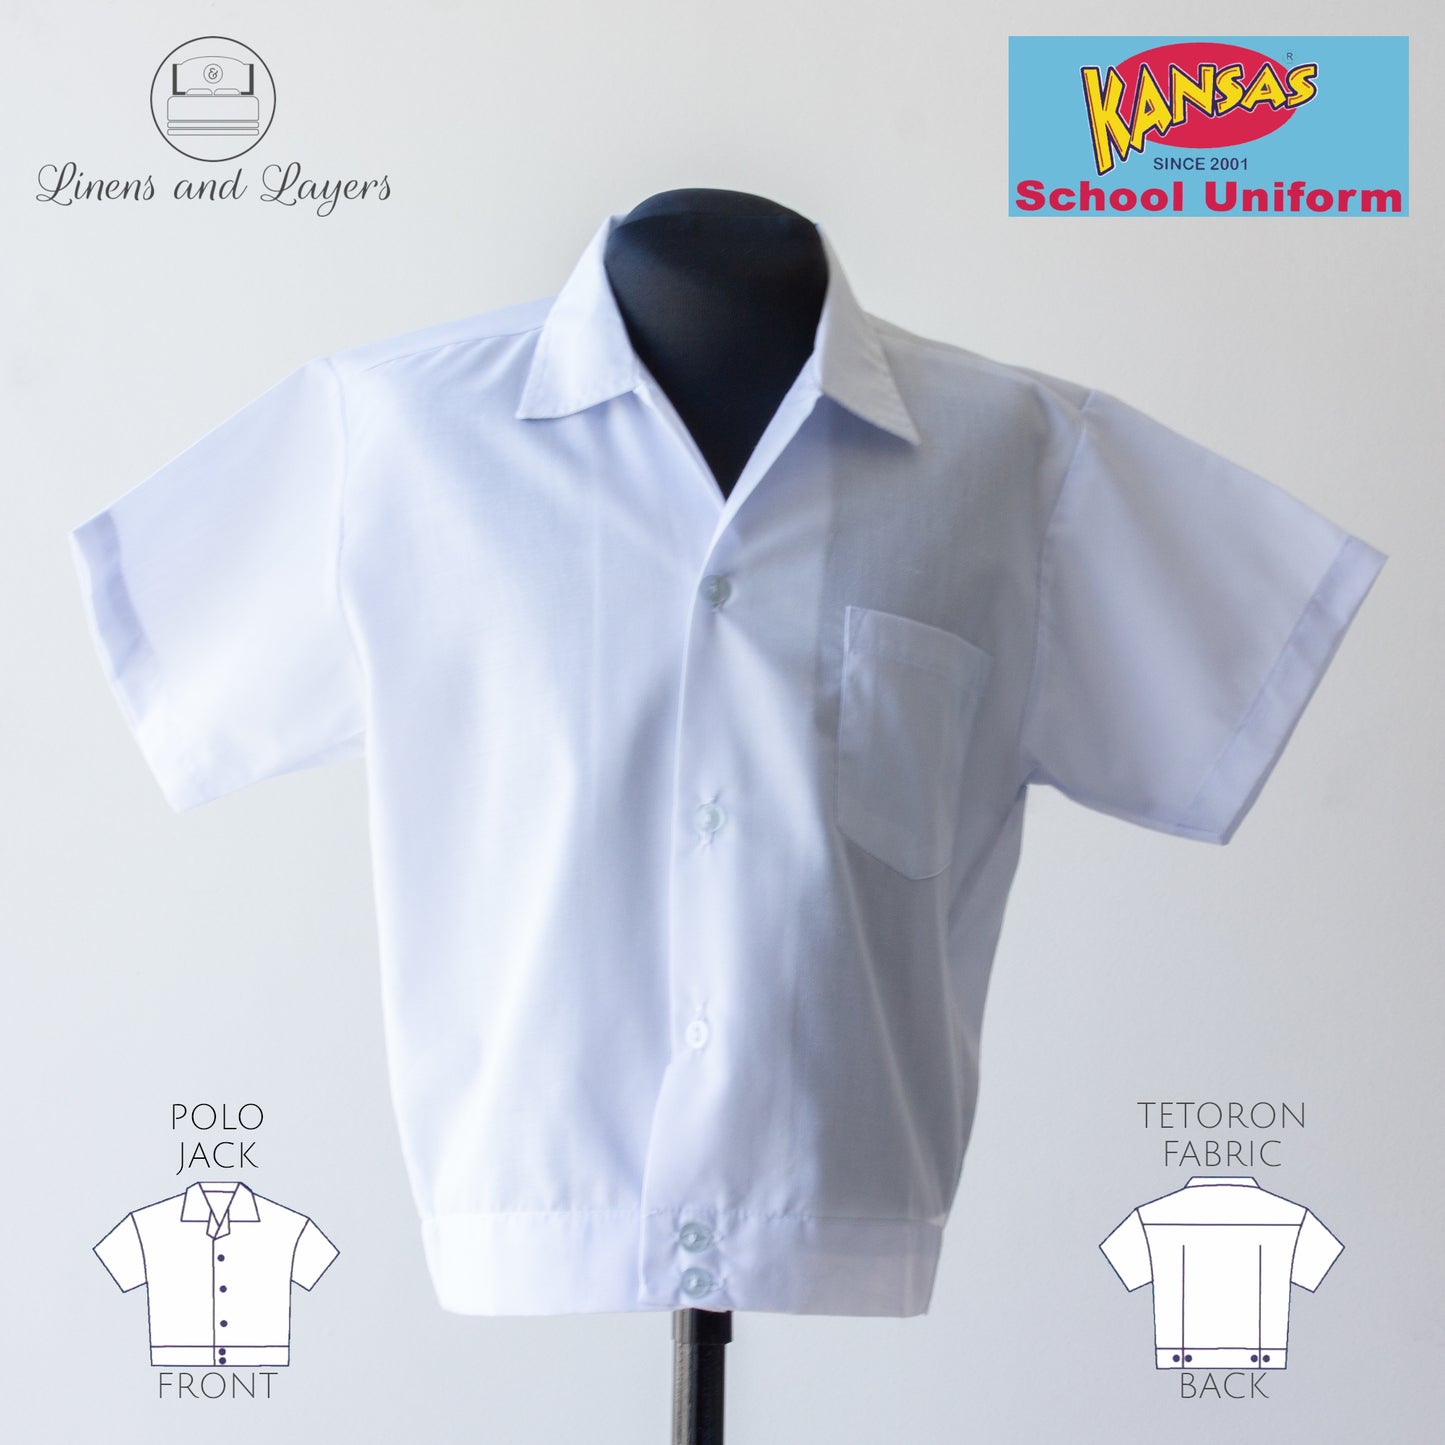 Kansas Polo Jack School Uniform - Shirt Jack - Tetoron